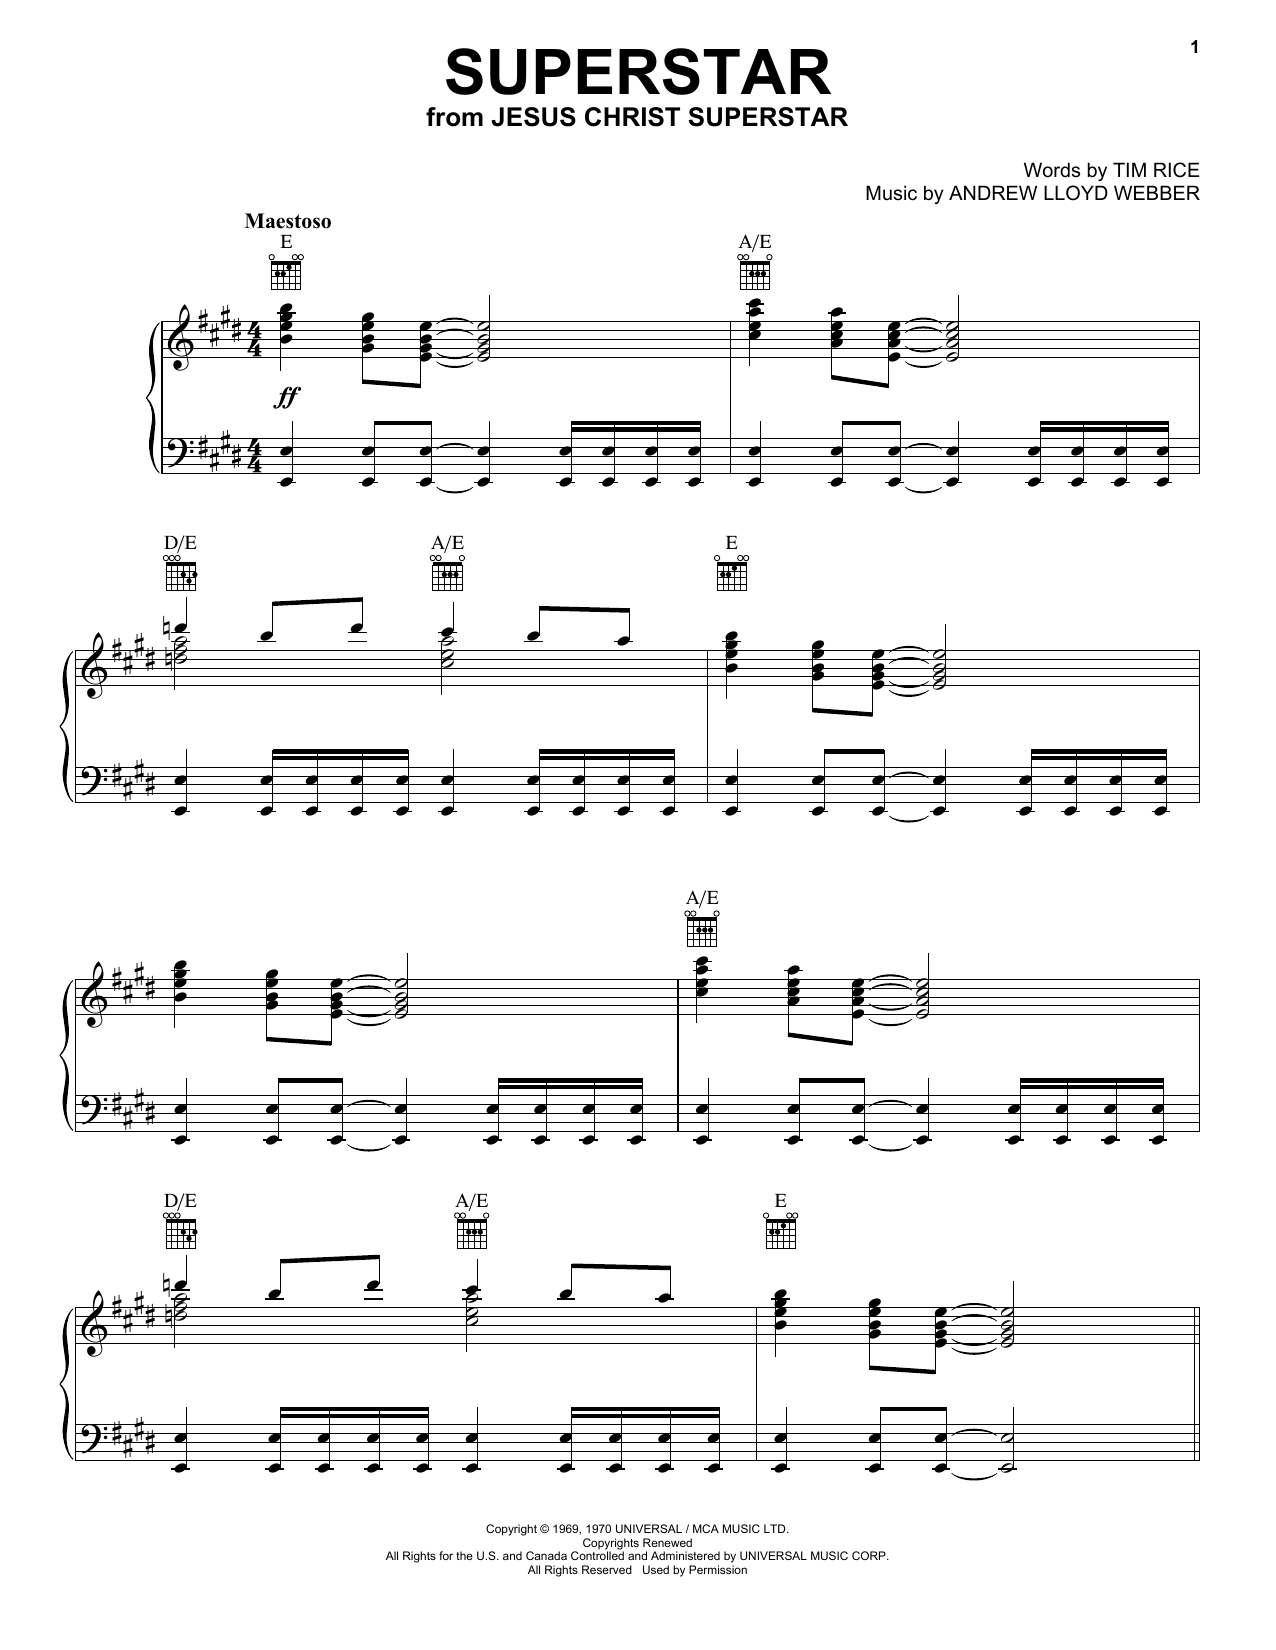 Andrew Lloyd Webber Superstar (from Jesus Christ Superstar) Sheet Music Notes & Chords for Alto Saxophone - Download or Print PDF